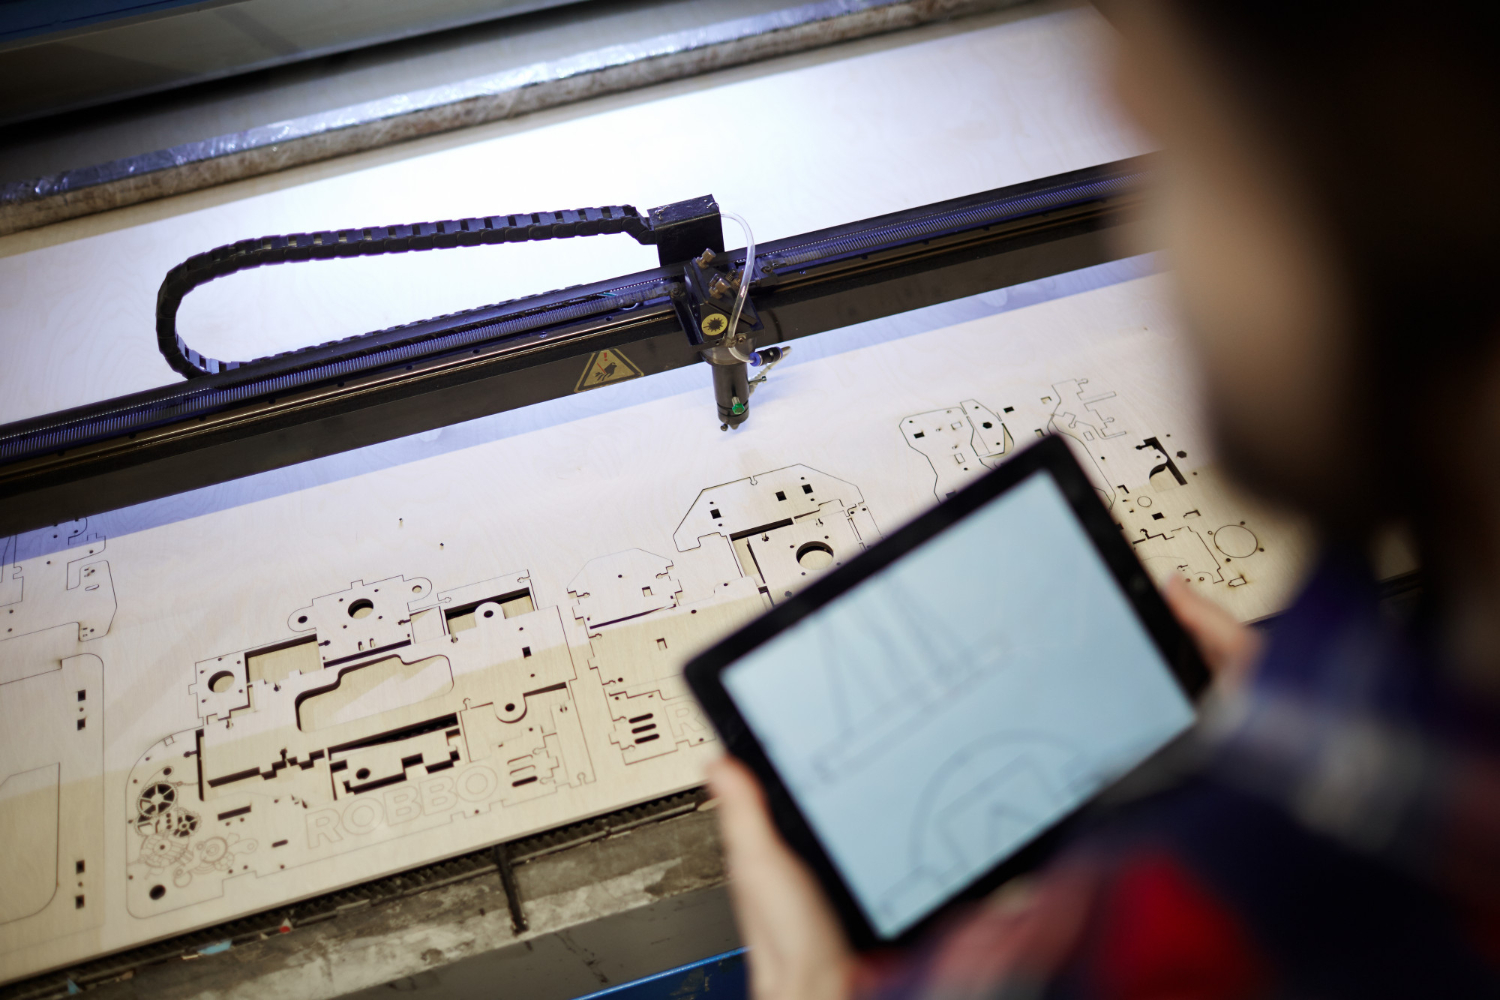 CNC milling – characteristics of a woodworking method